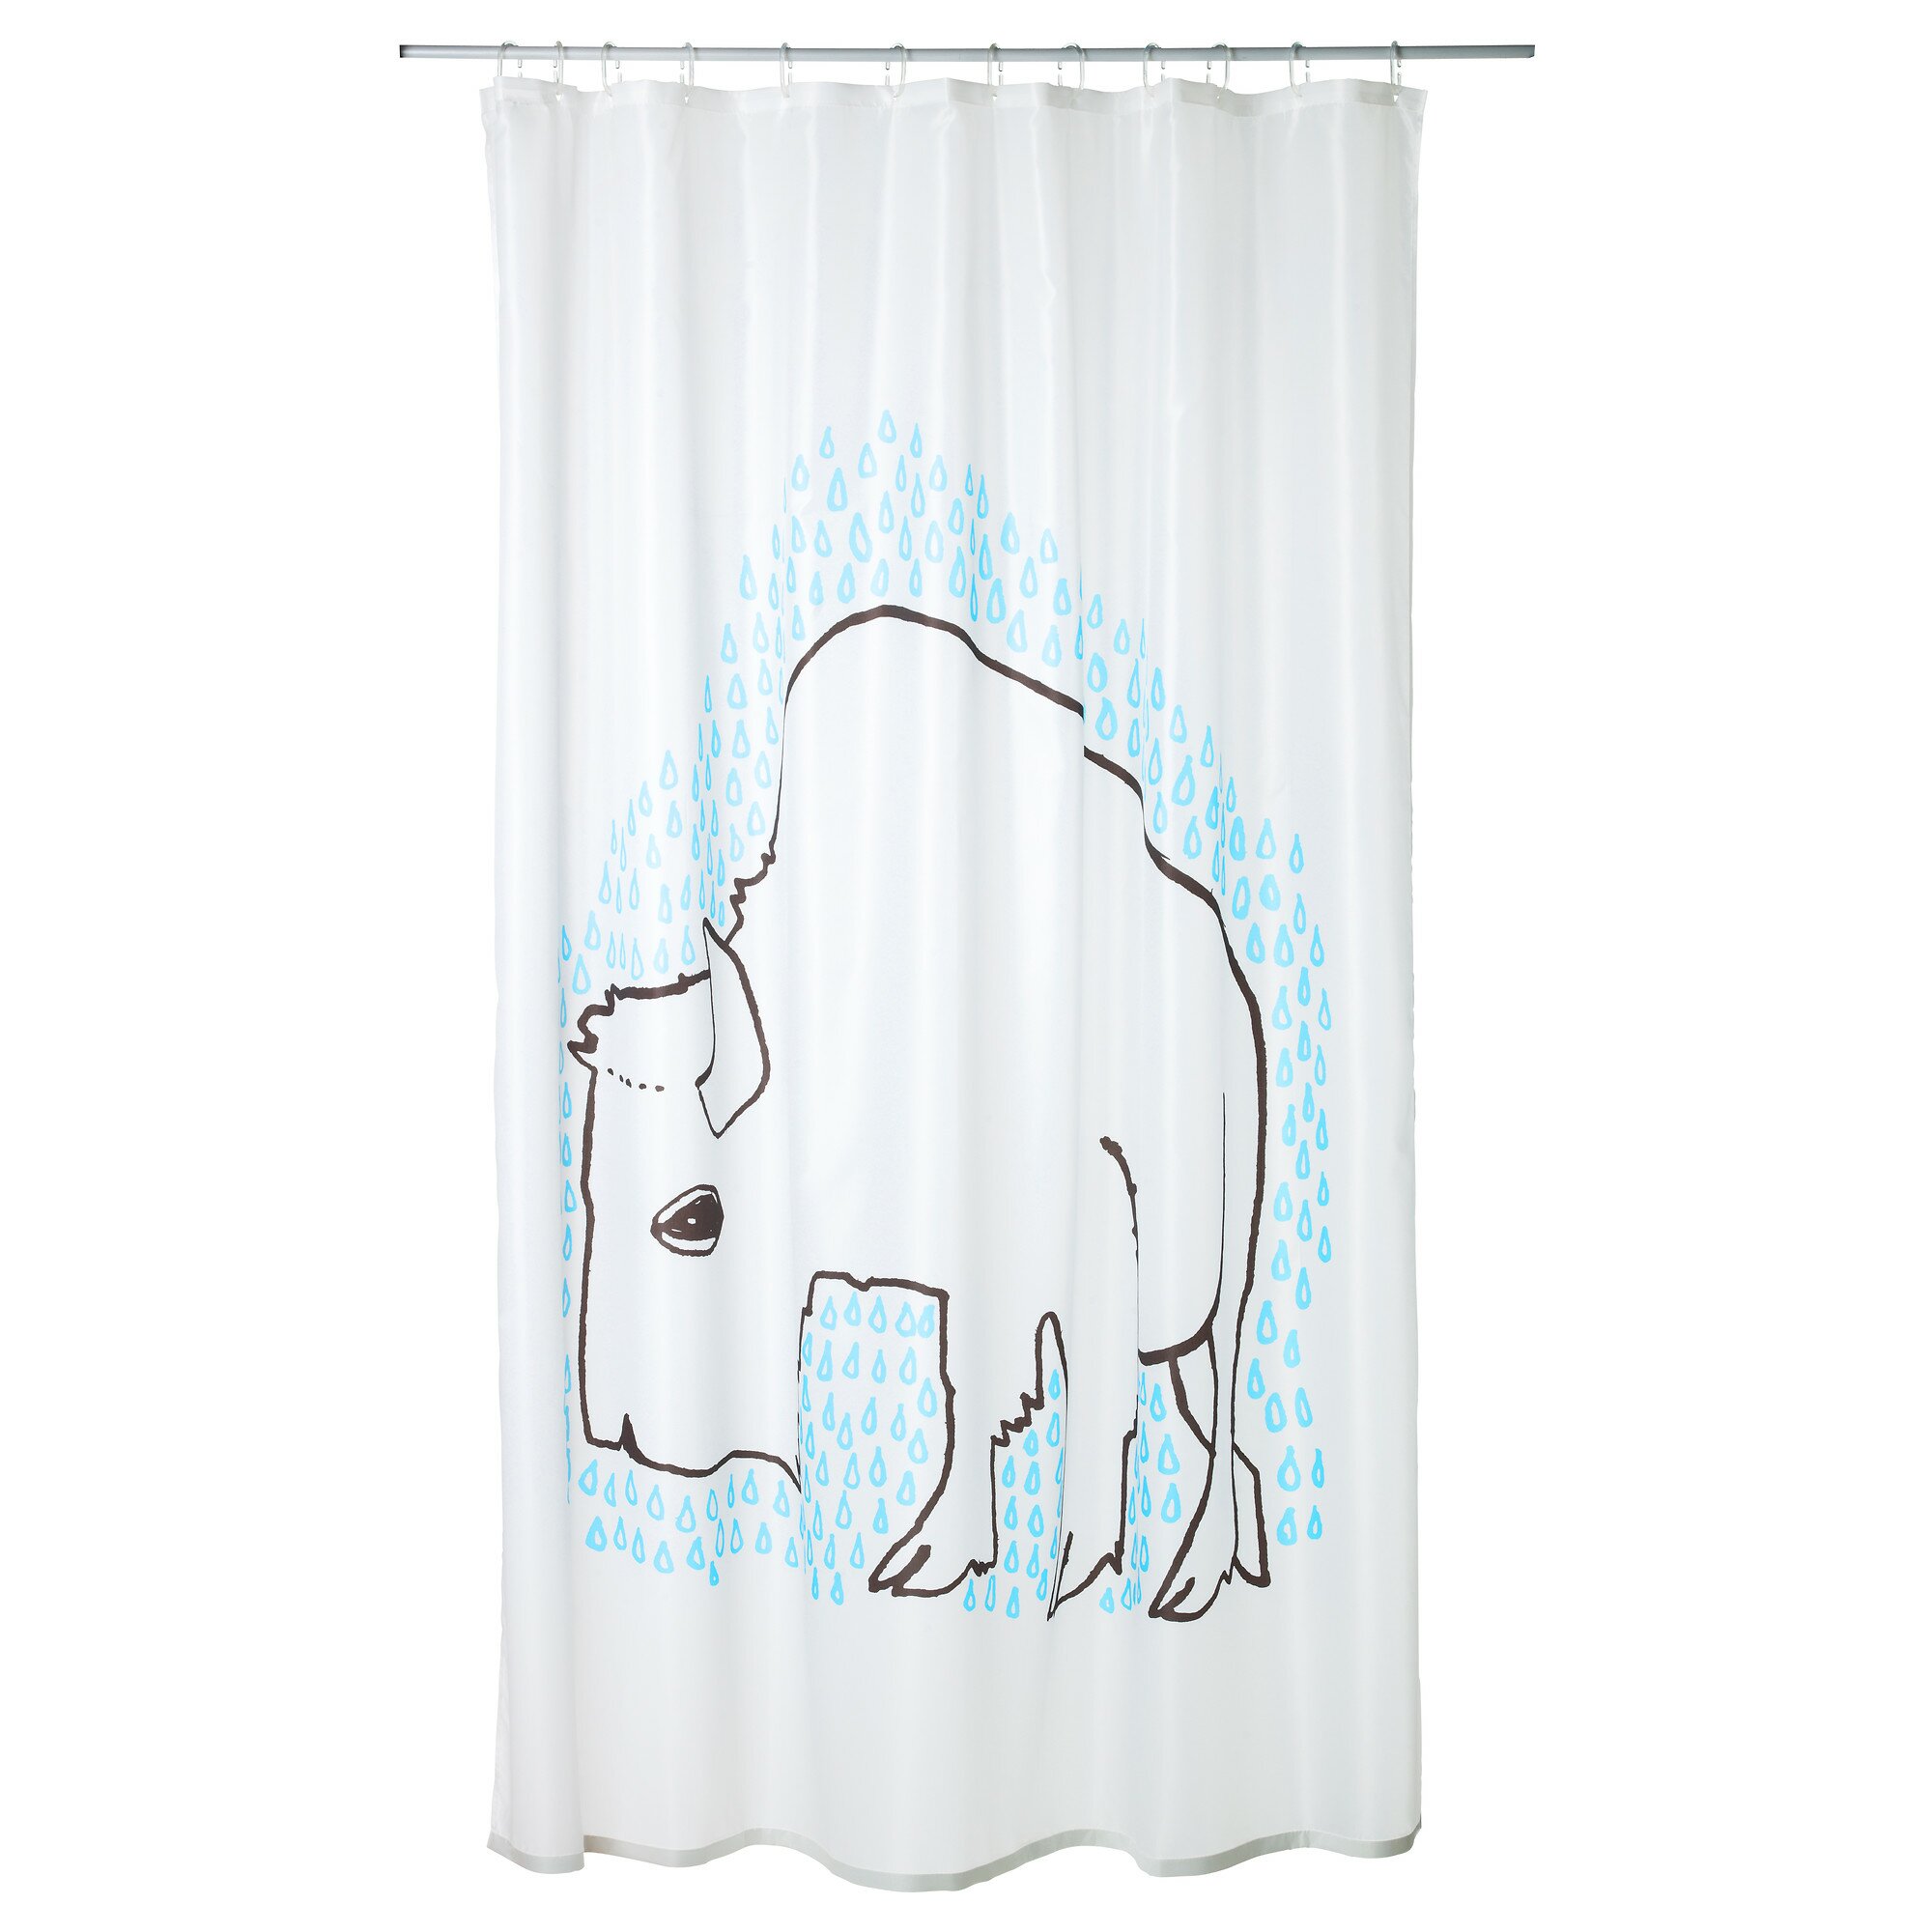 Ikea Shower Curtain for Best Your Bathroom Decoration: Shower Curtain Rail | Ikea Shower Curtain Hooks | Ikea Shower Curtain